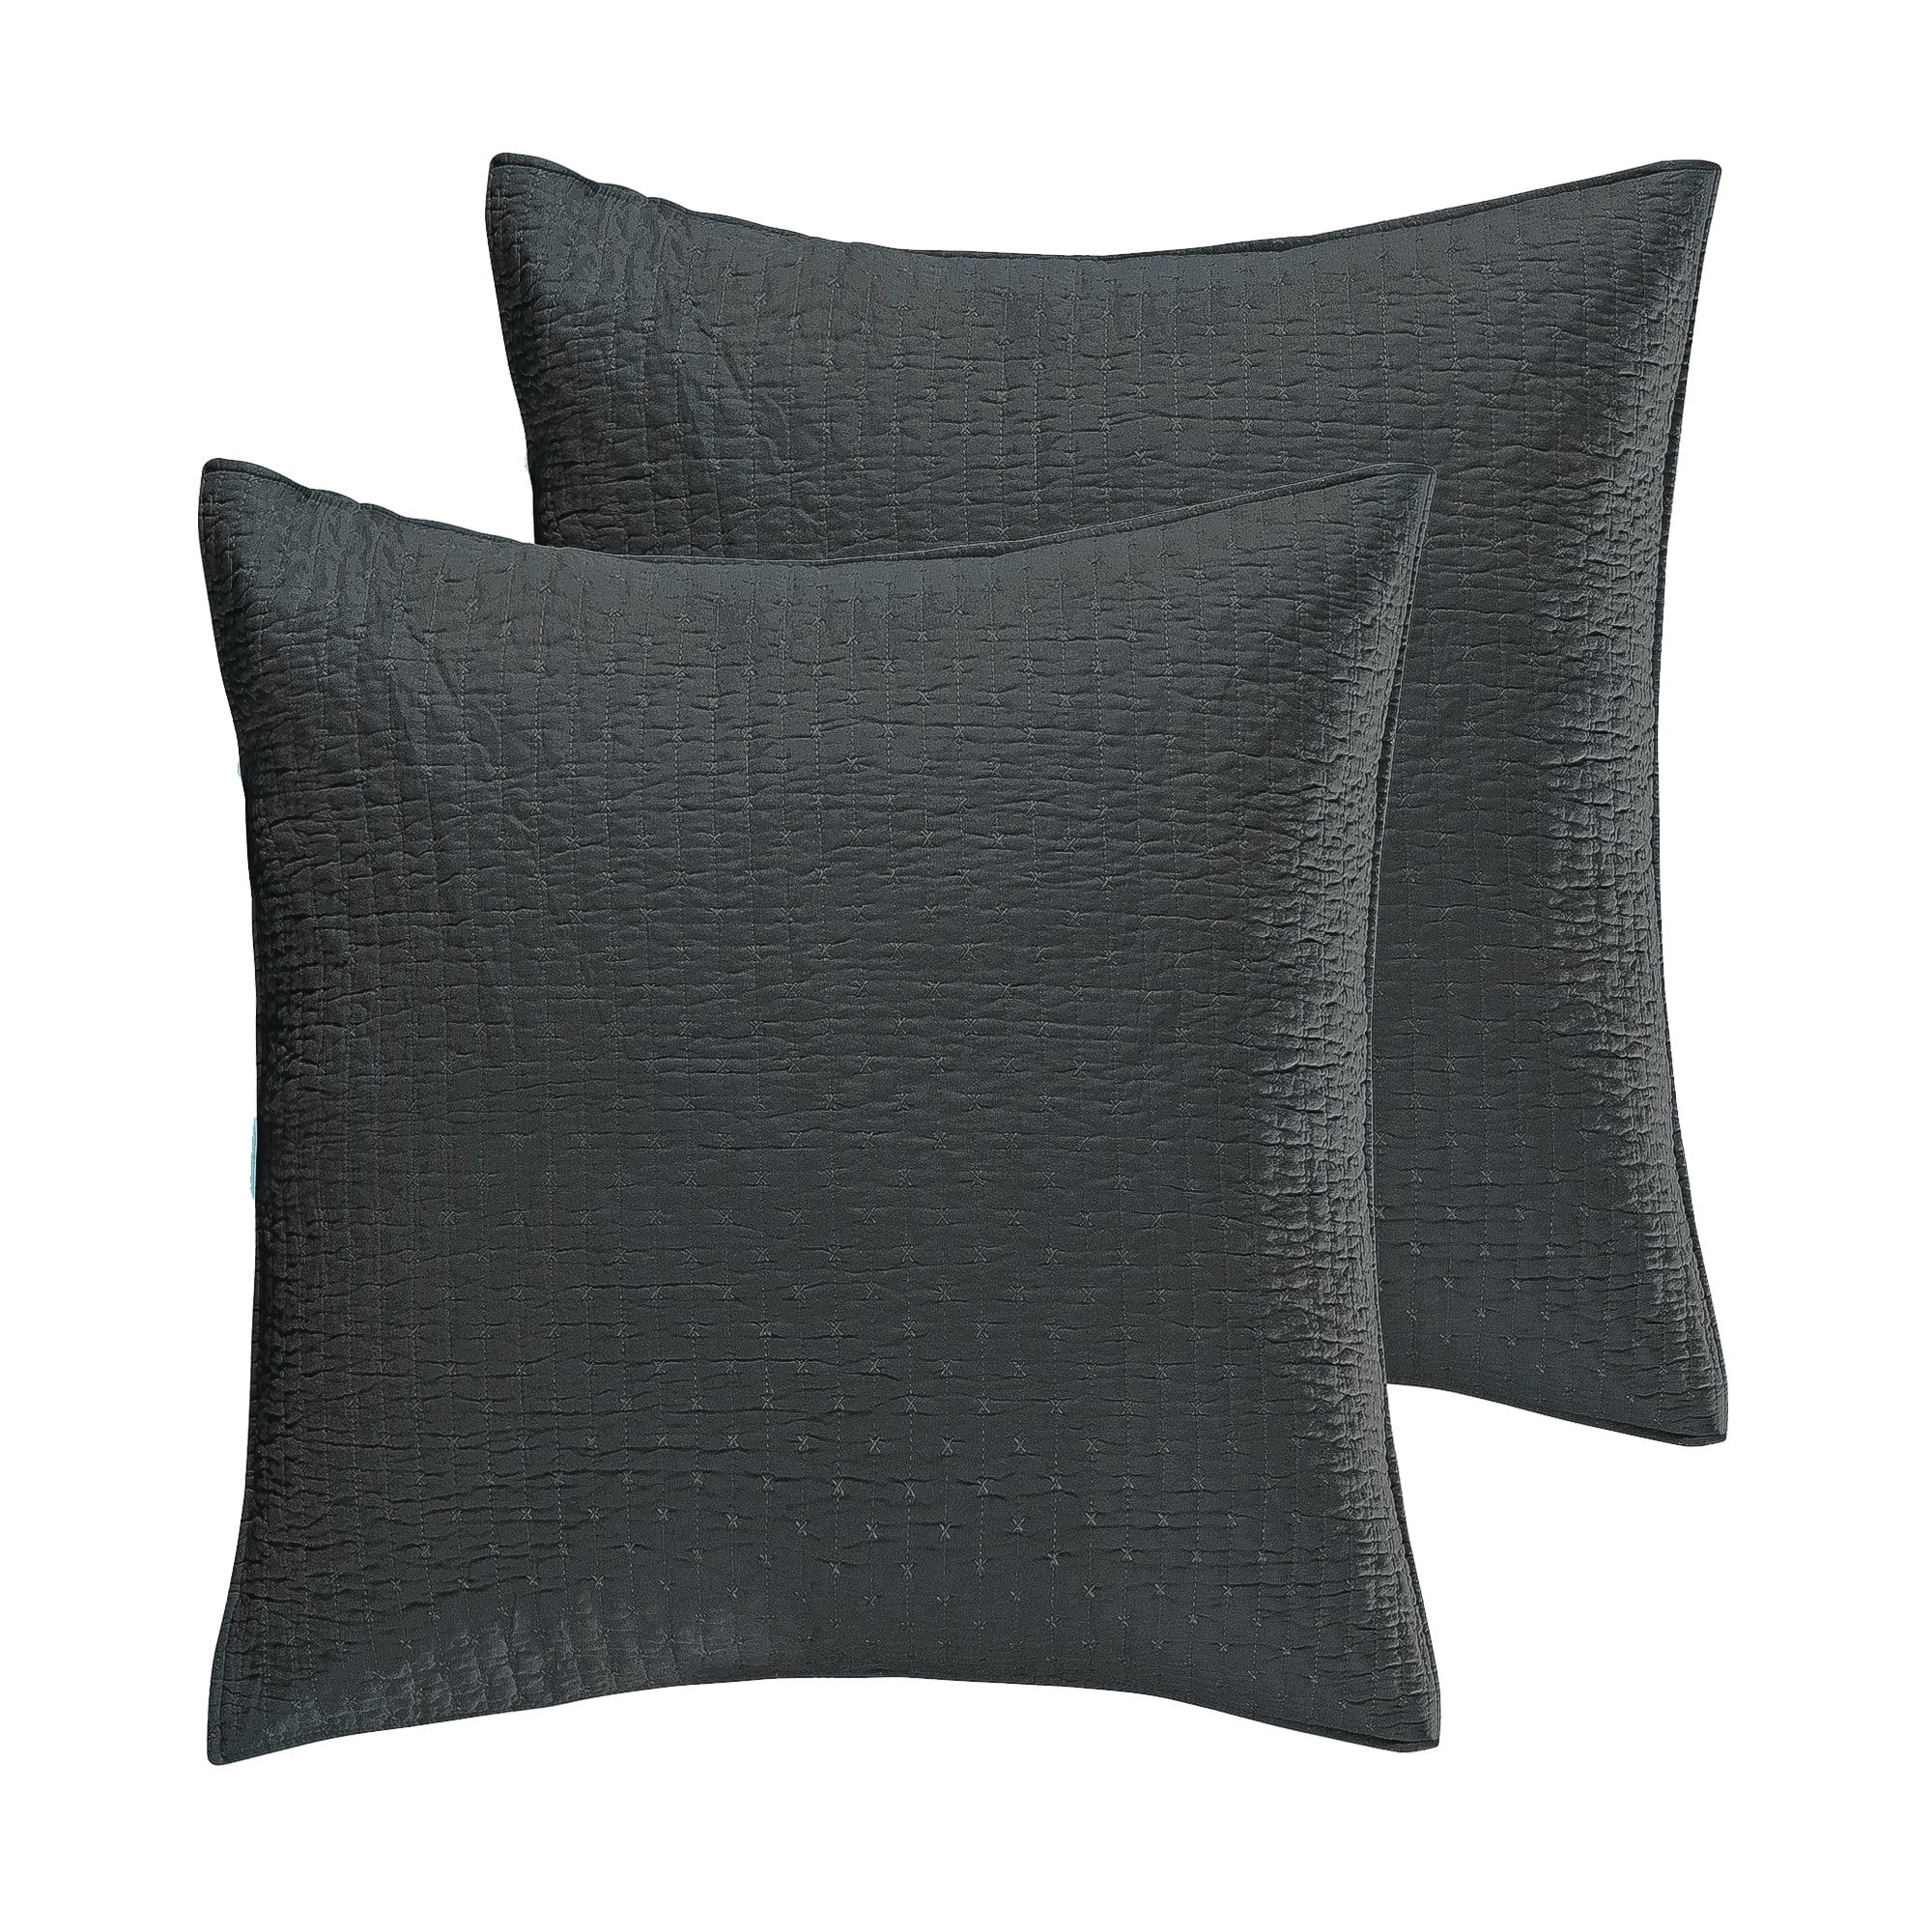 Charcoal Grey Cotton Euro Sham Set with Simple Cross Stitch - 26x26